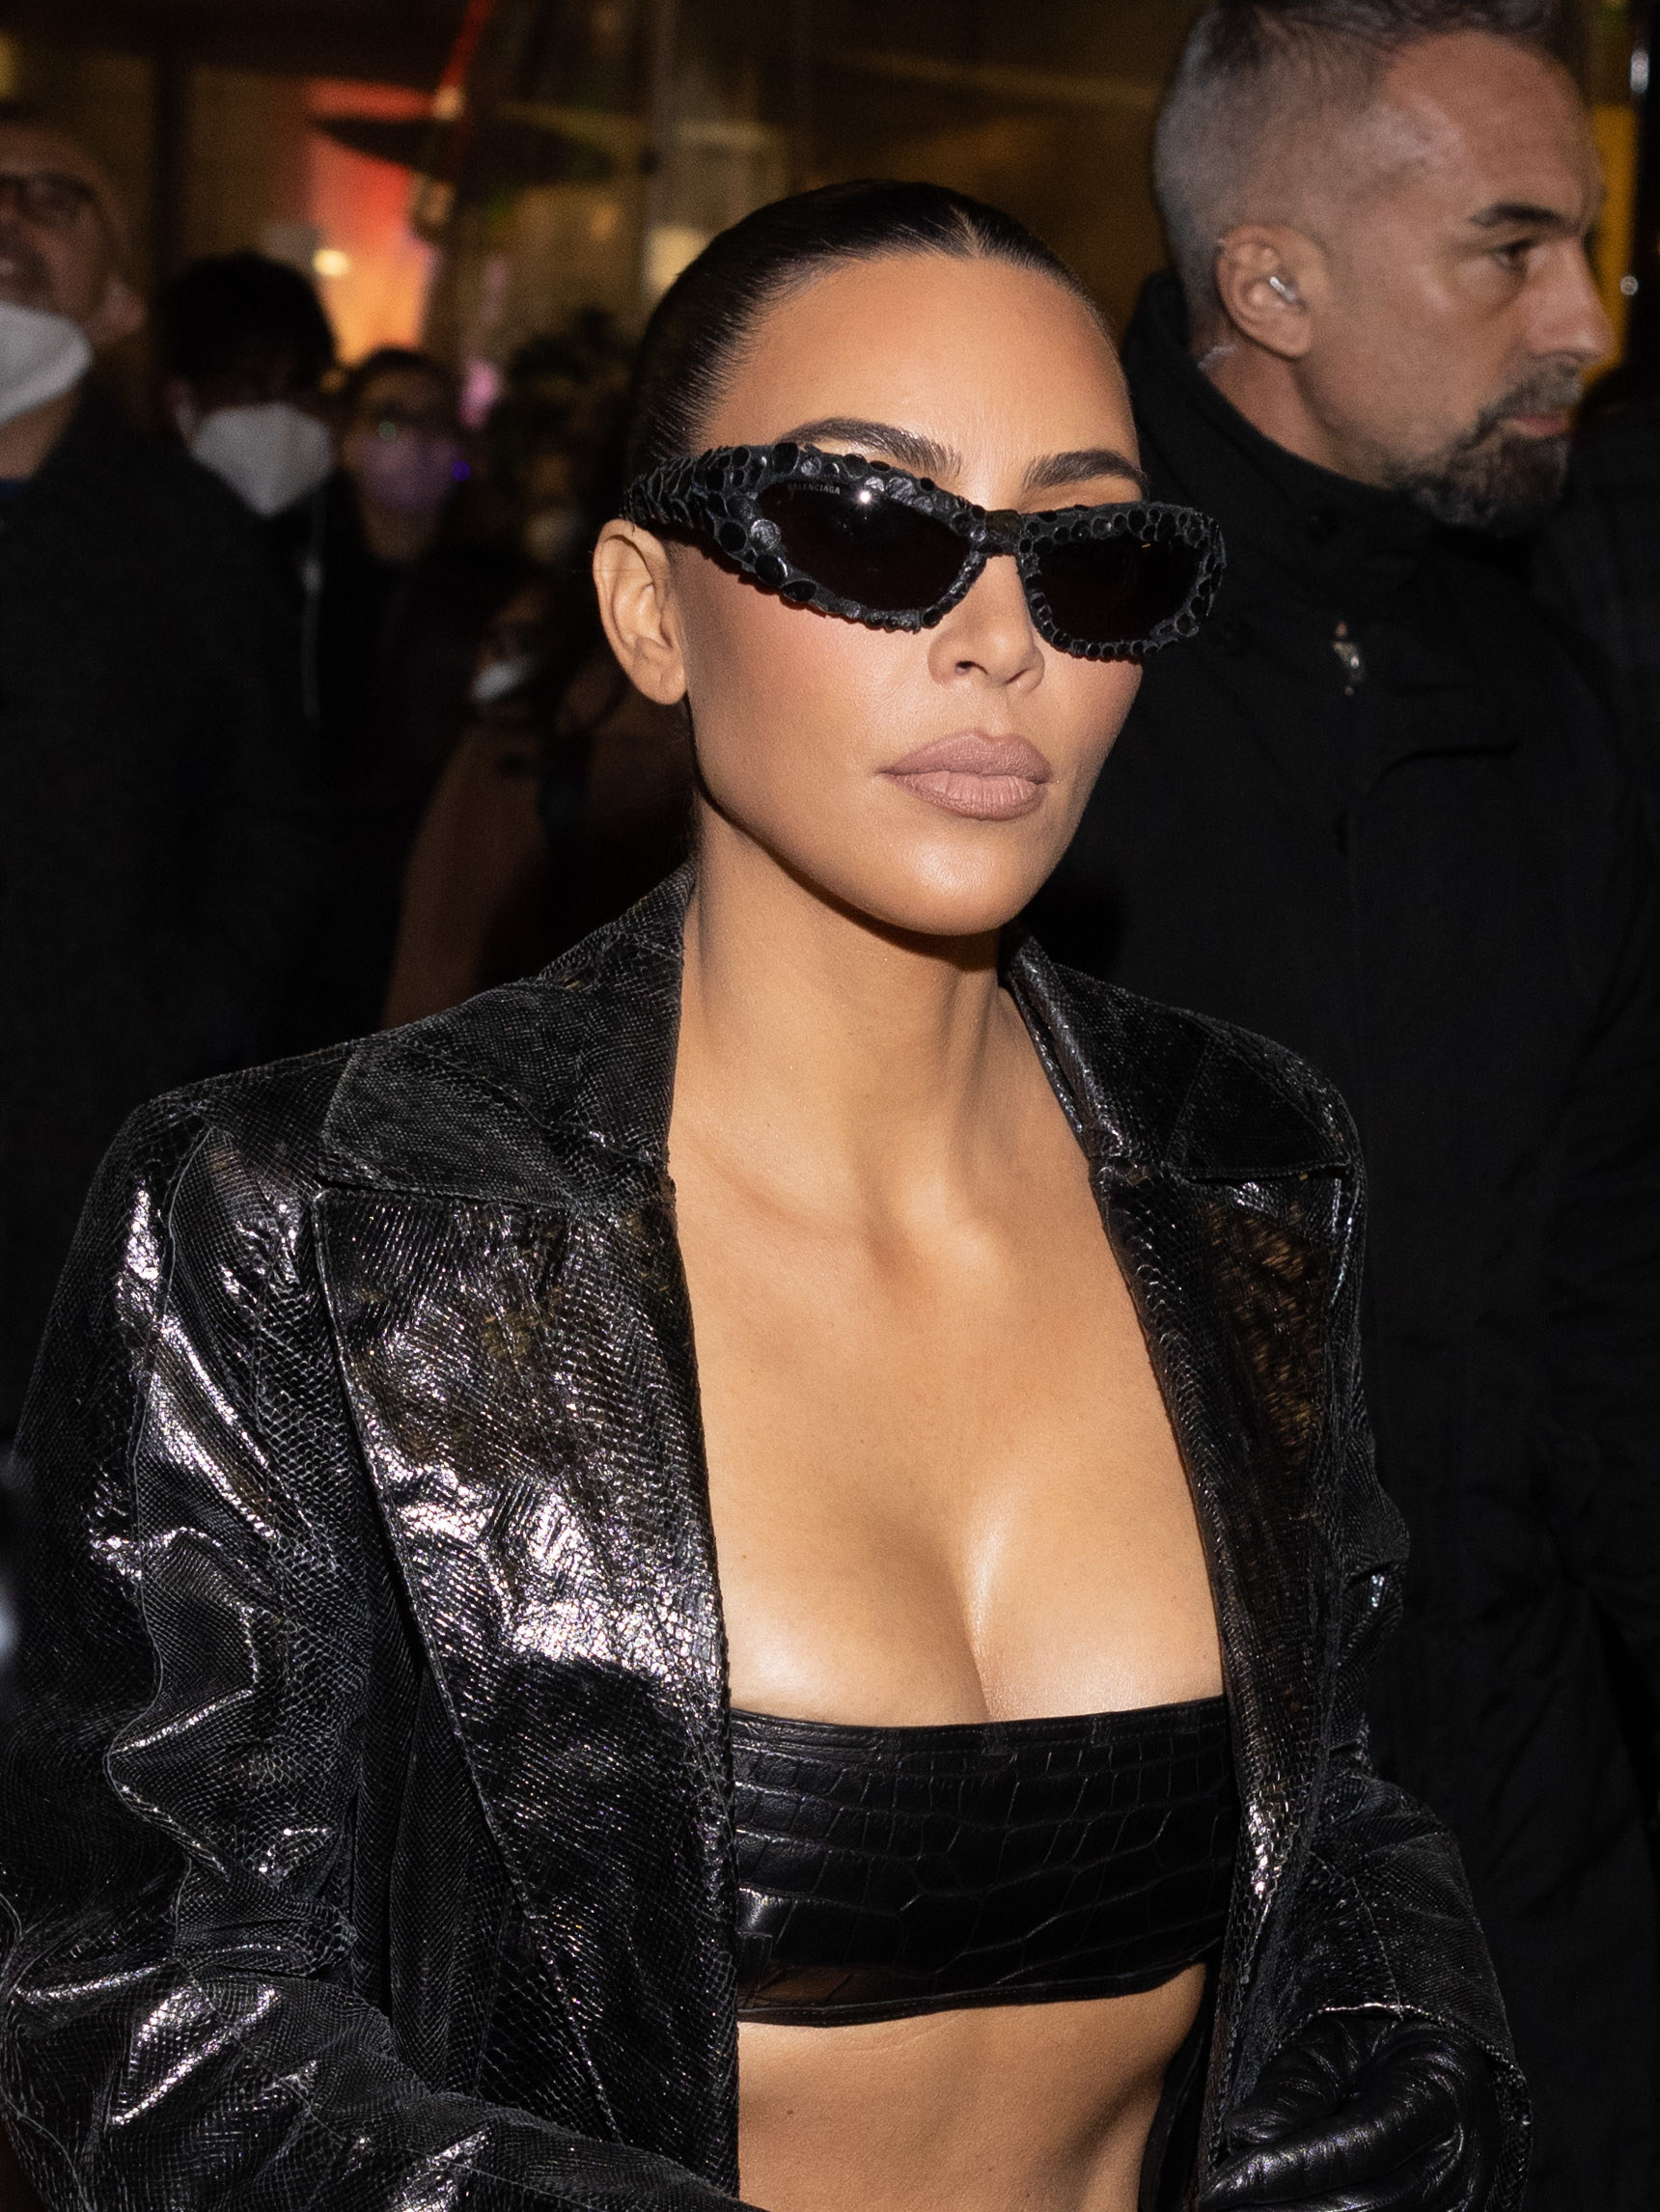 Kim walks in a coat, top, and sunglasses